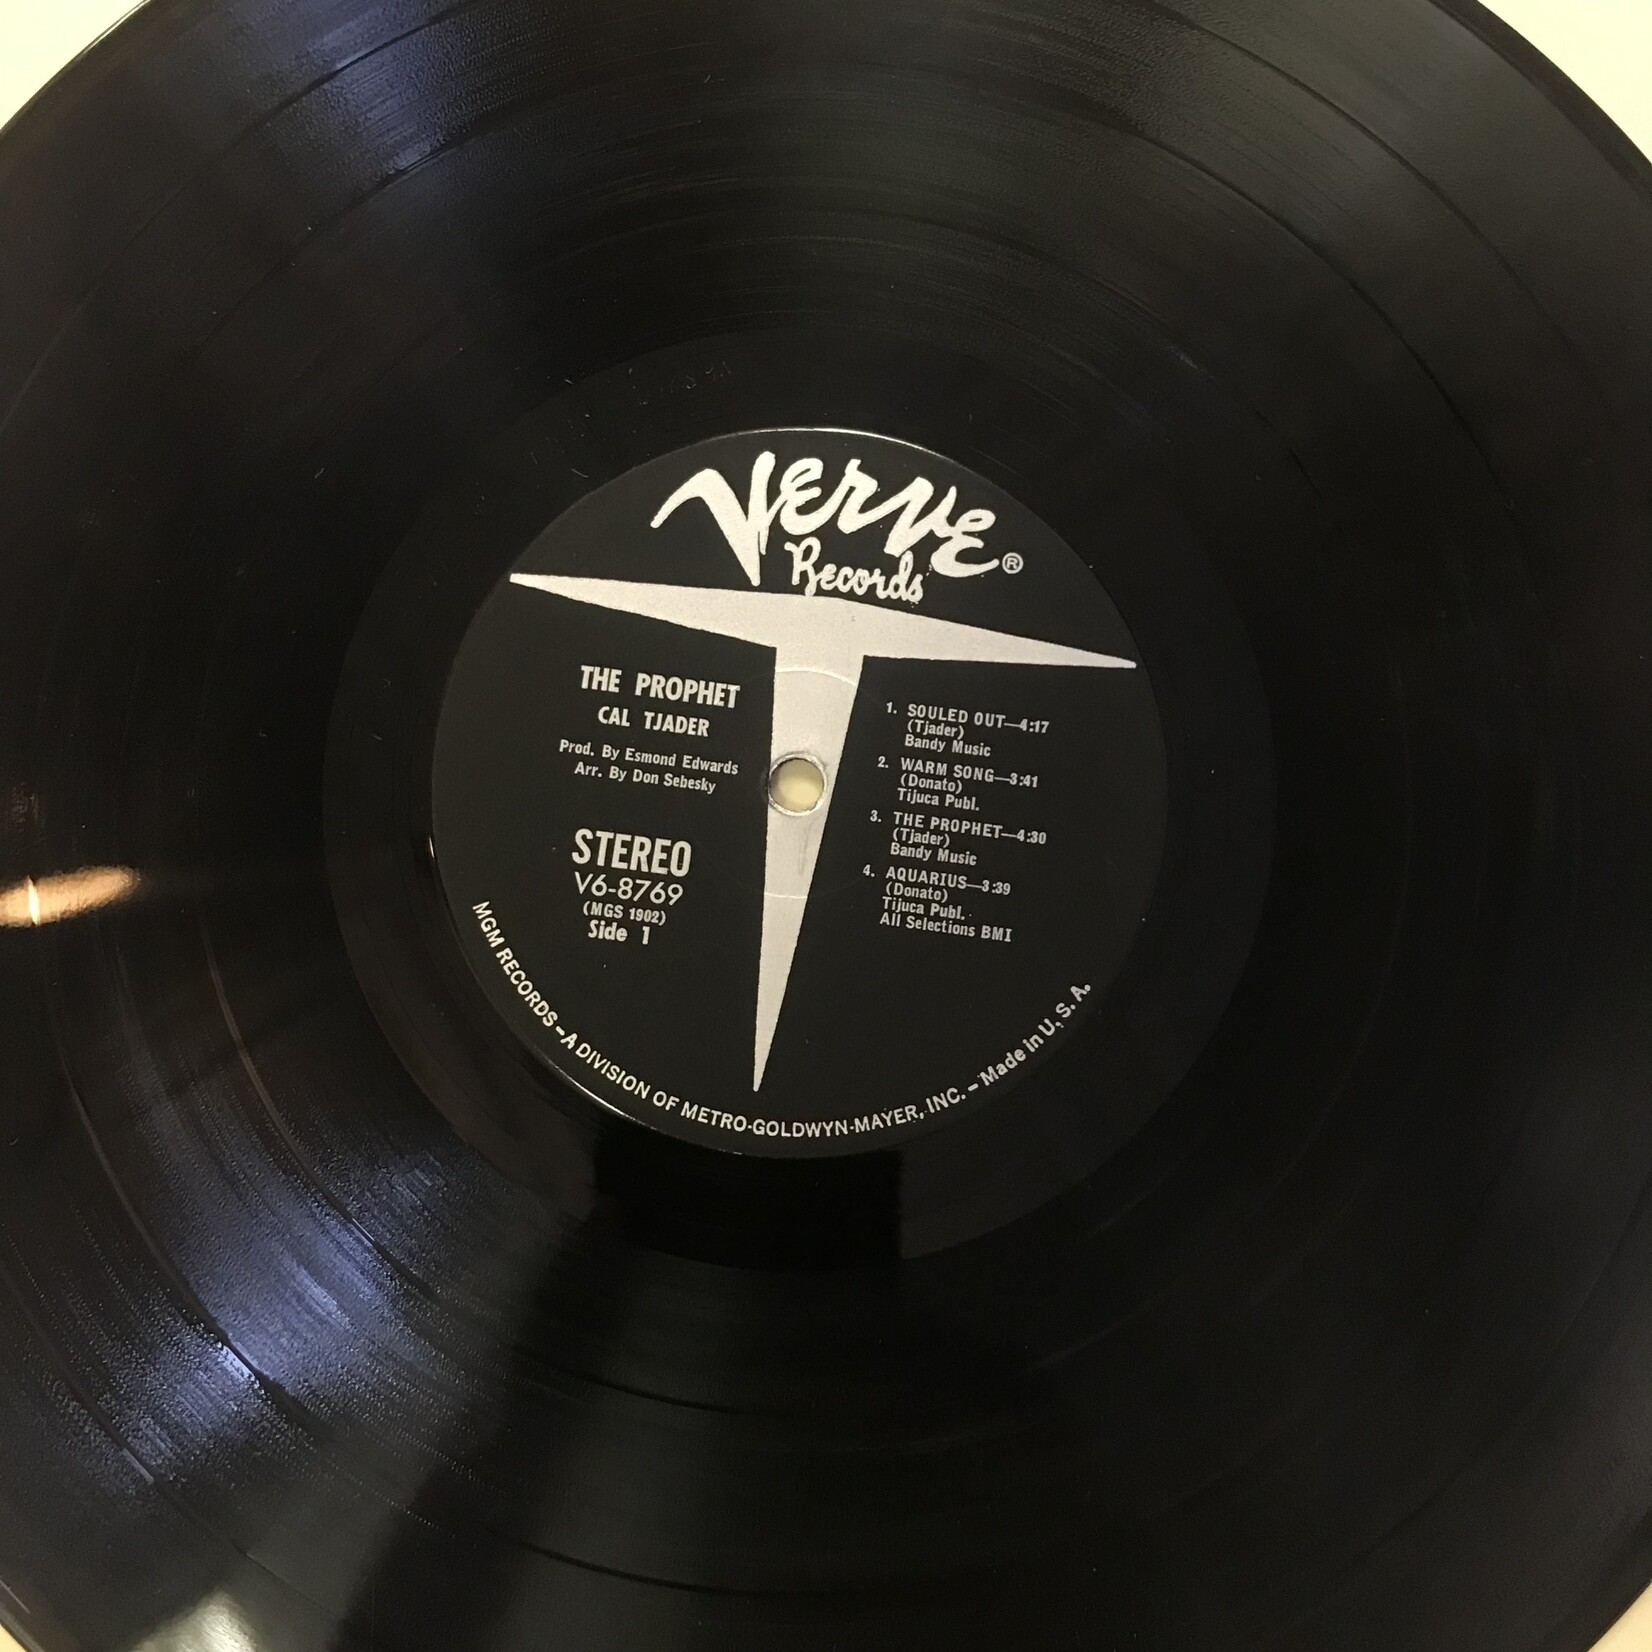 Cal Tjader - The Prophet - V6 8769 - Vinyl LP (USED)